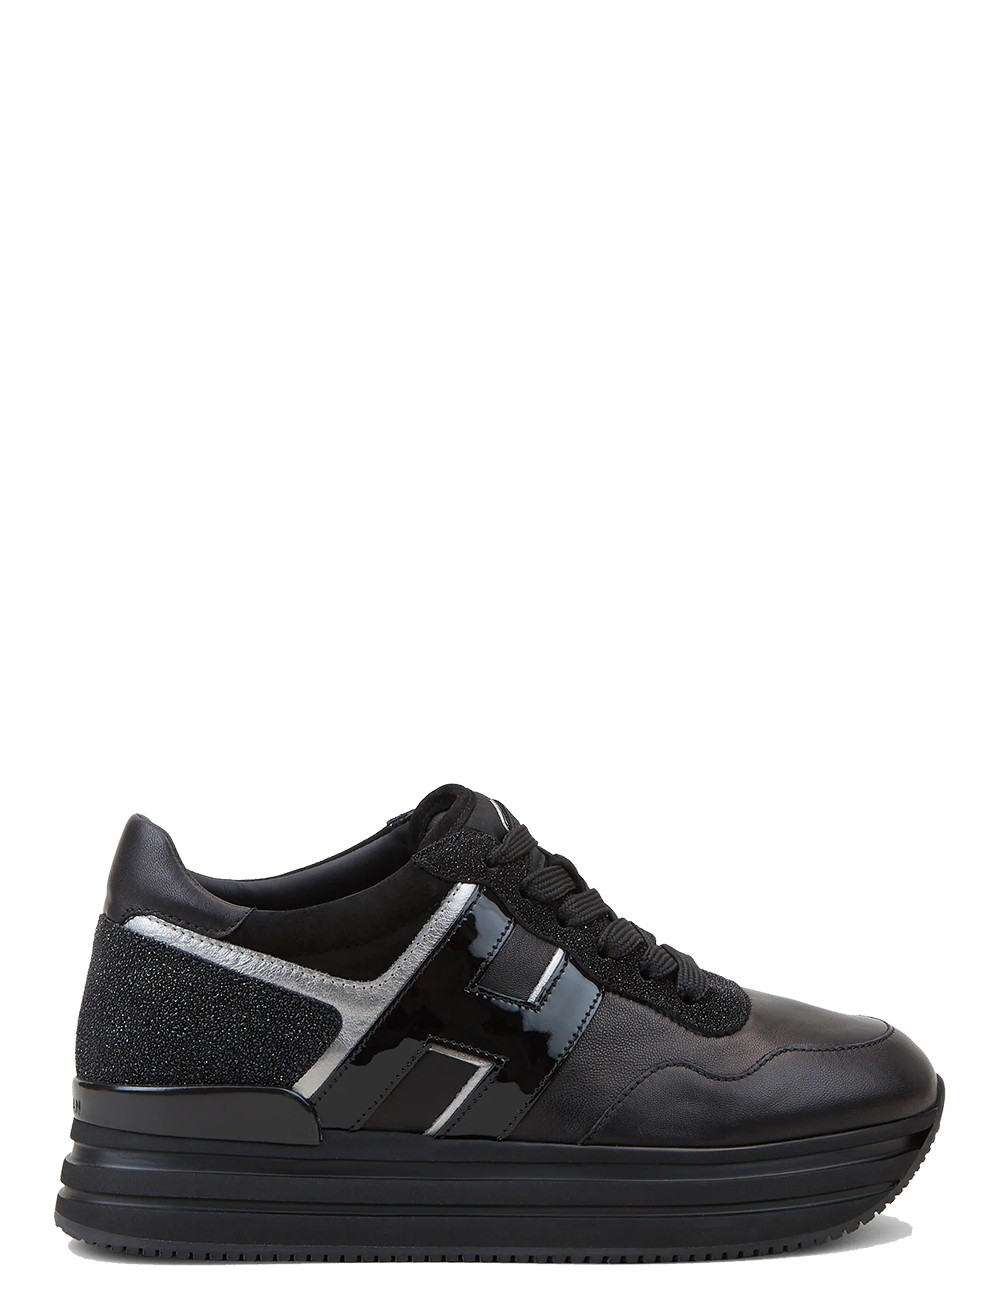 Sneakers Midi Platform nero-argento